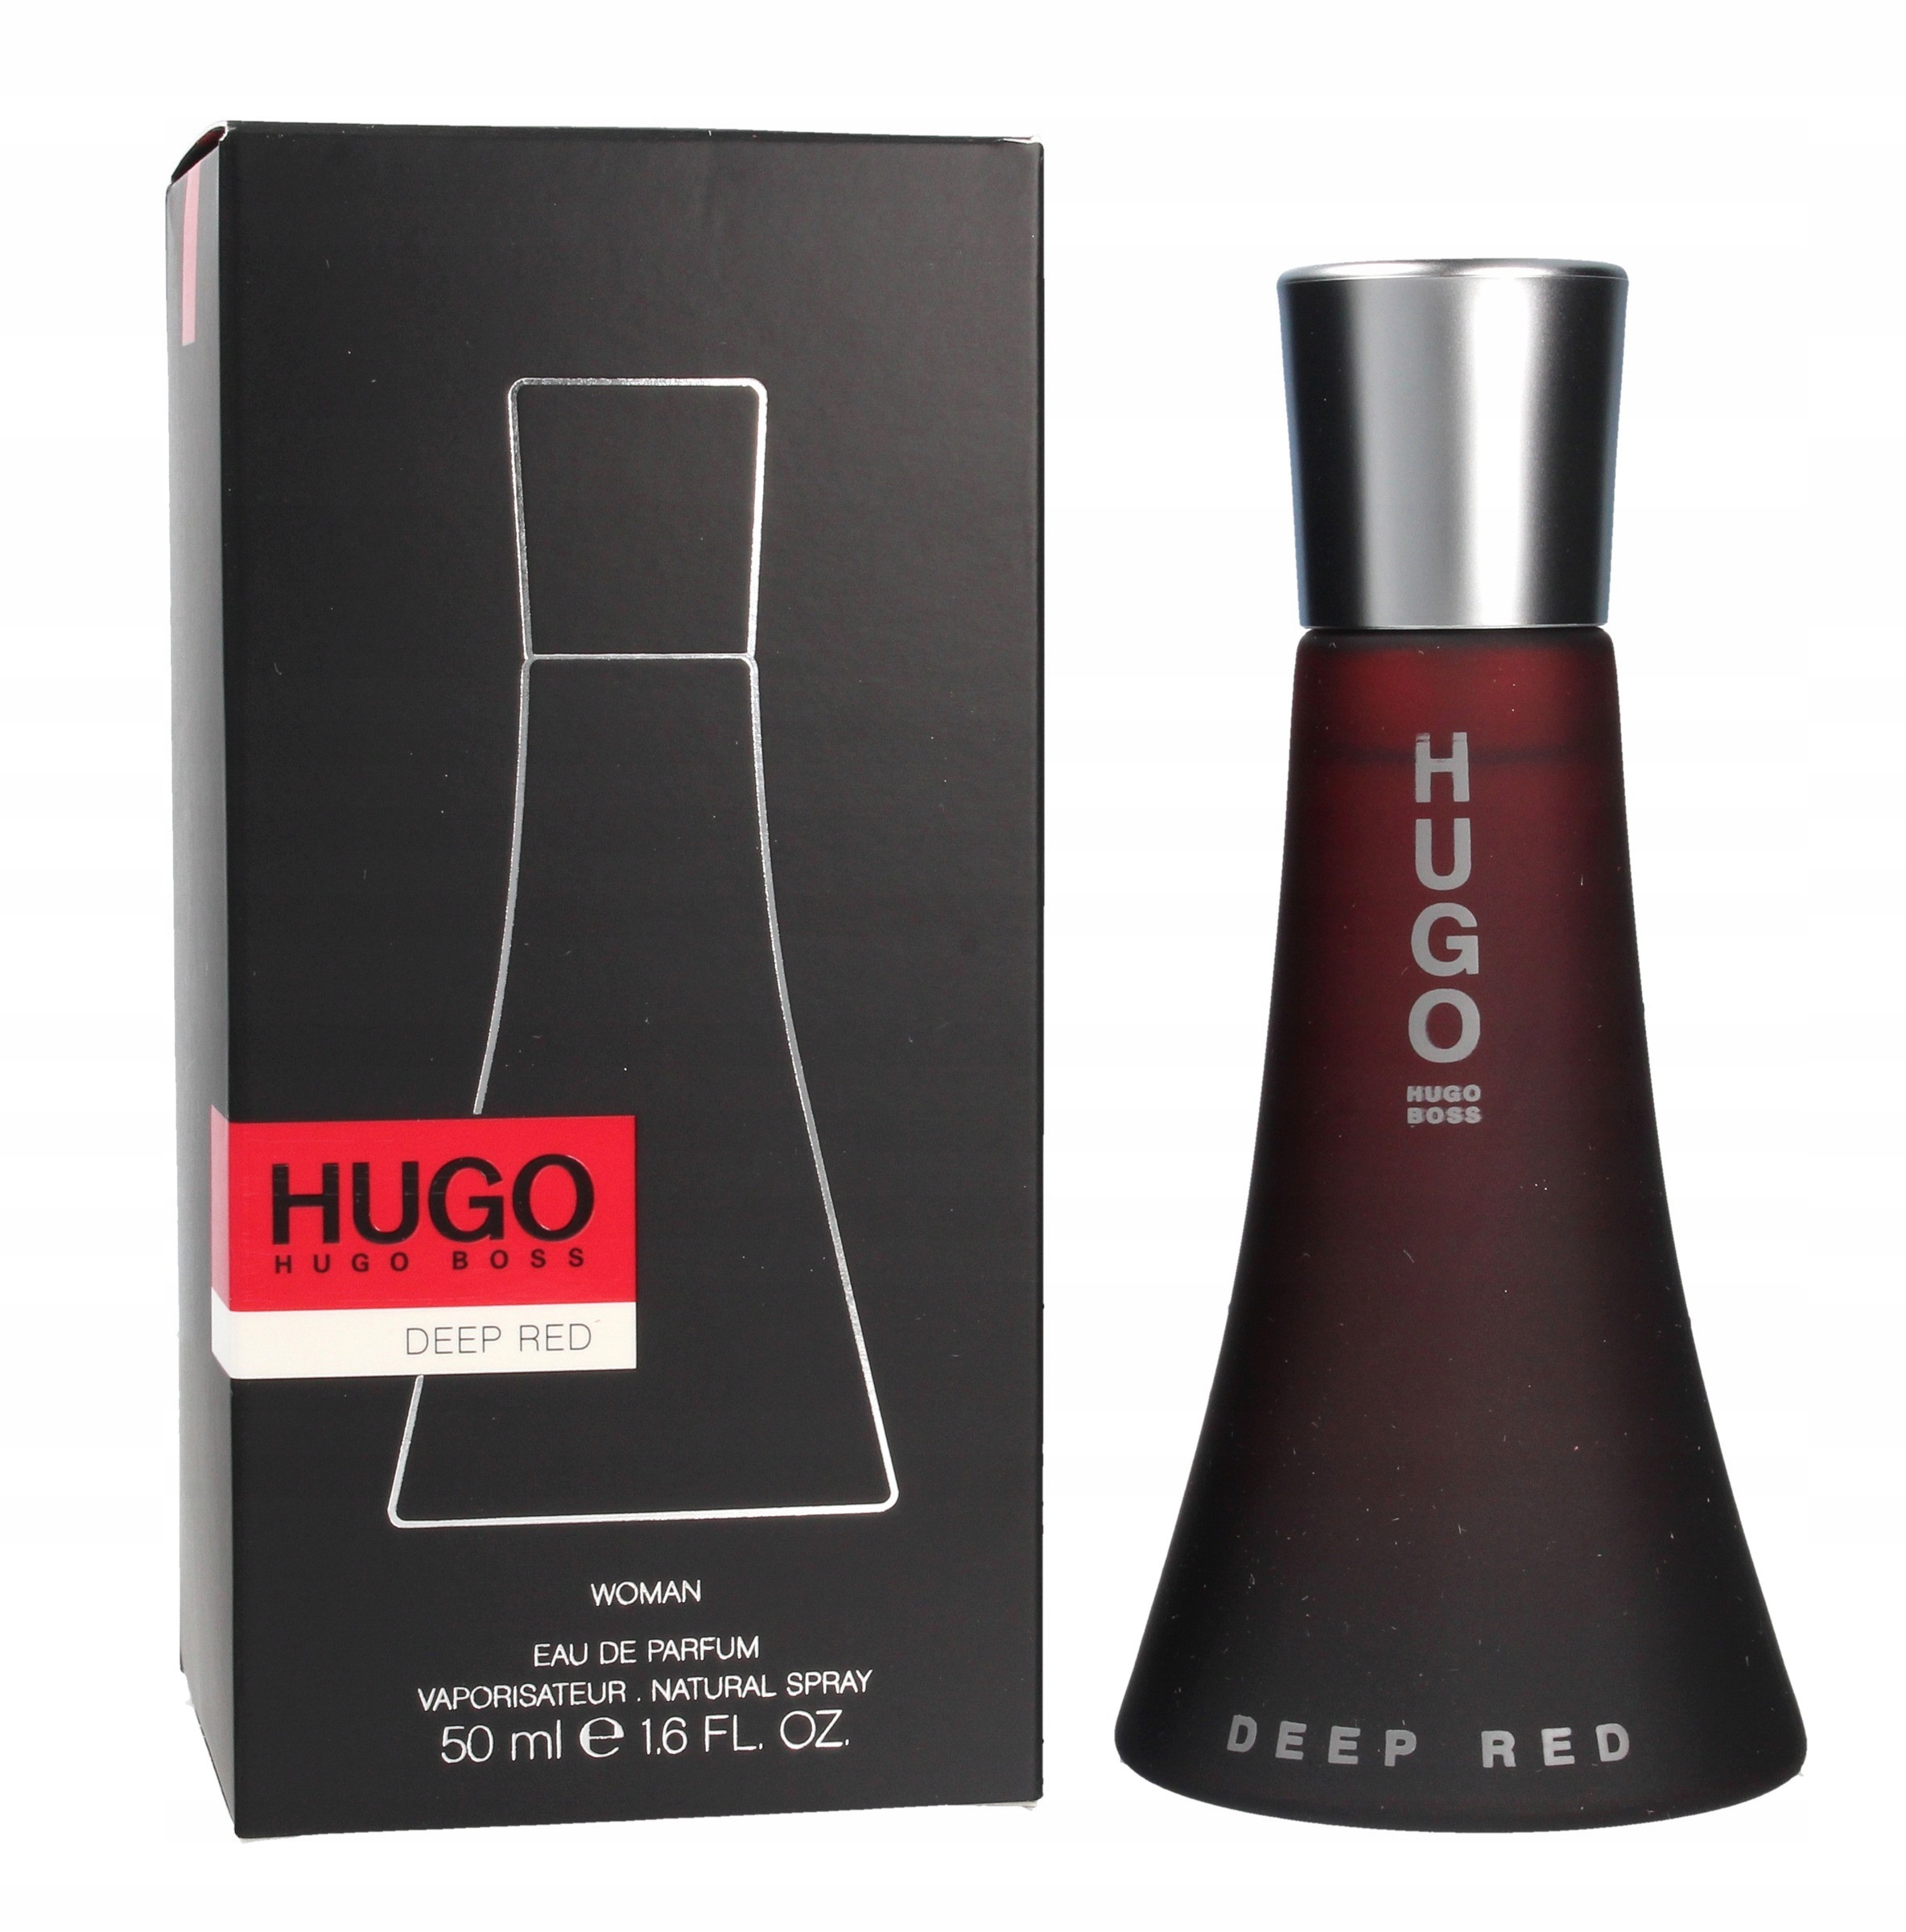 Духи Хьюго дип ред. Boss Hugo Deep Red 90ml EDP. Туалетная вода Hugo Boss Deep Red. Туалетная вода Hugo Boss woman 50 ml. Хьюго босс черные